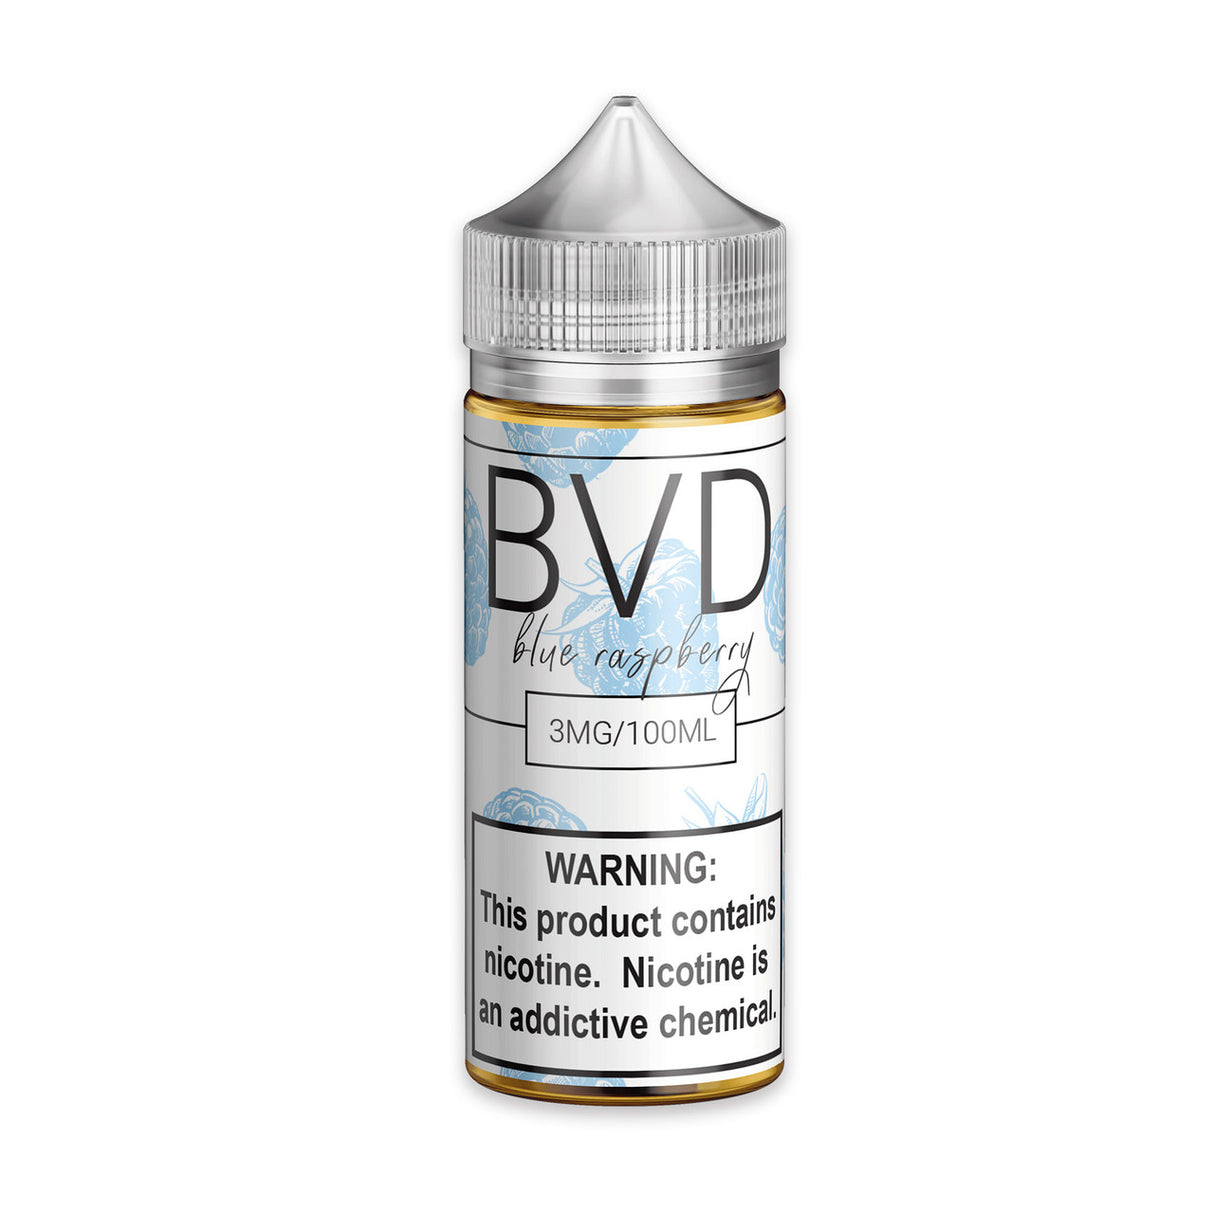 BVD blue raspberry vape juice - big vape deals ejuice online